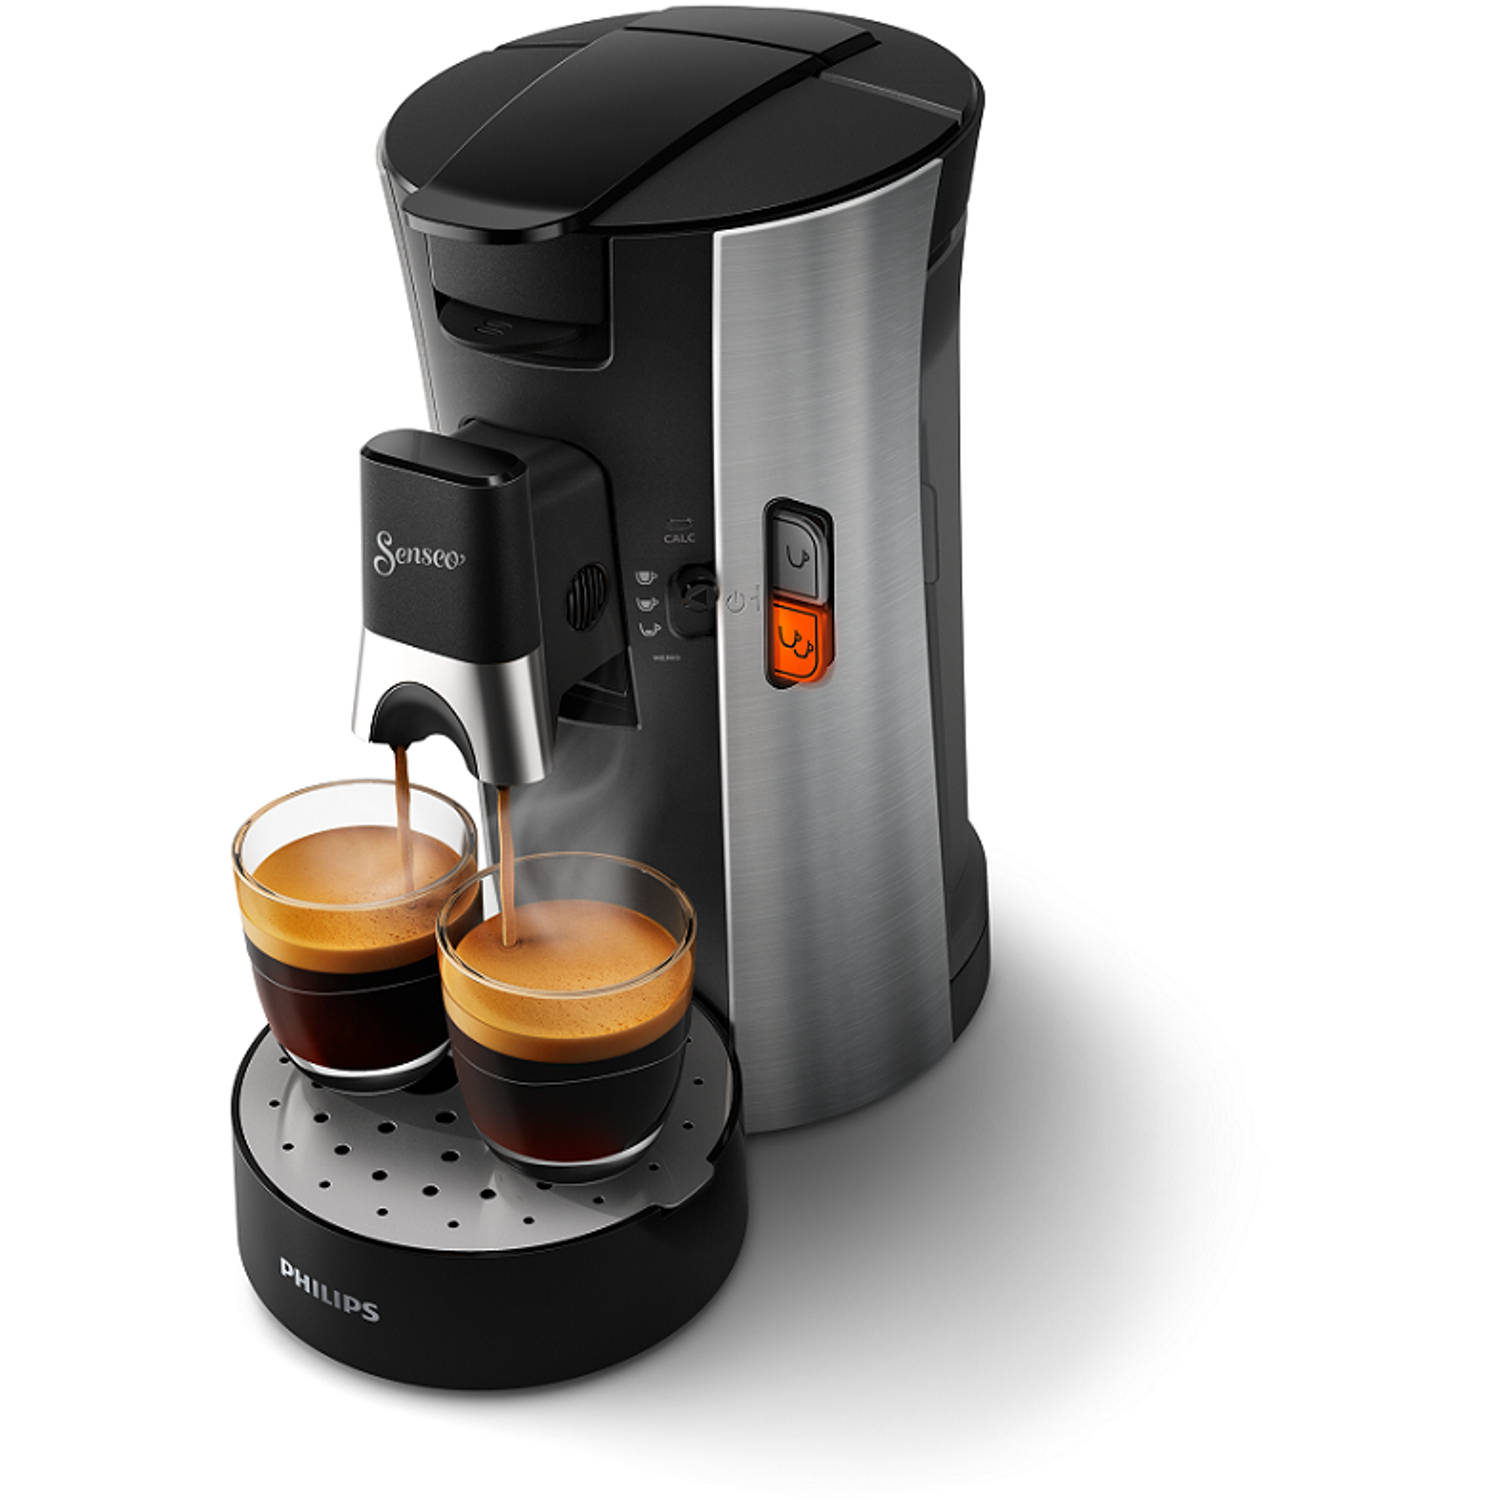 trechter Vleugels japon Philips SENSEO® Select koffiepadmachine CSA250/10 RVS | Blokker